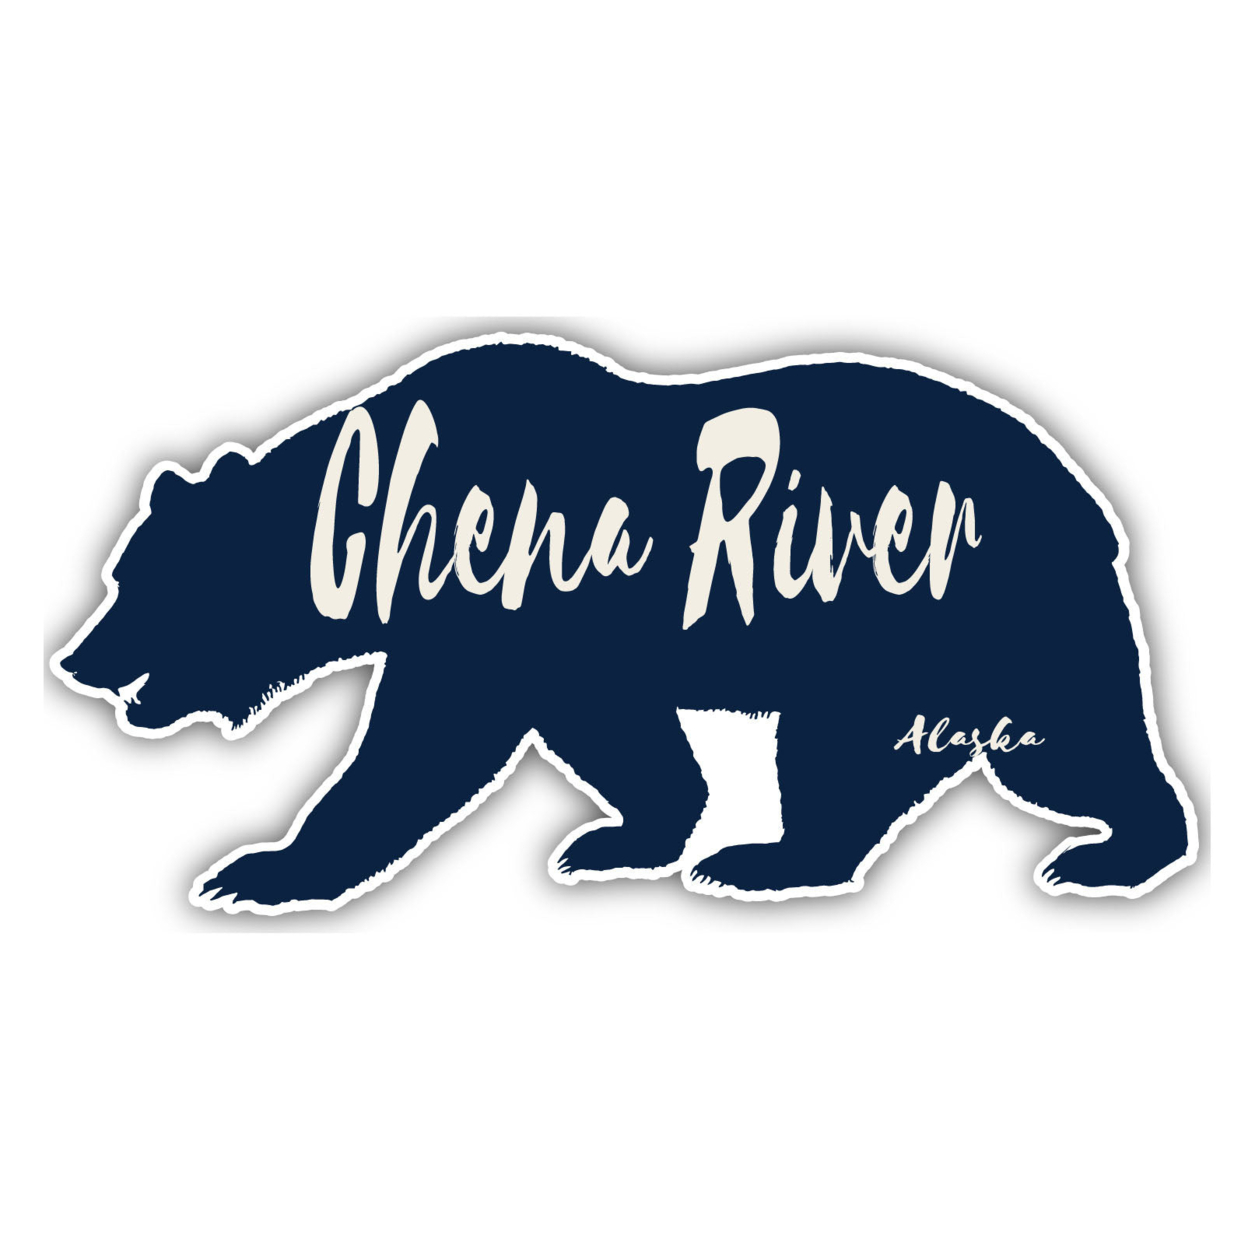 Chena River Alaska Souvenir Decorative Stickers (Choose Theme And Size) - 4-Pack, 2-Inch, Bear